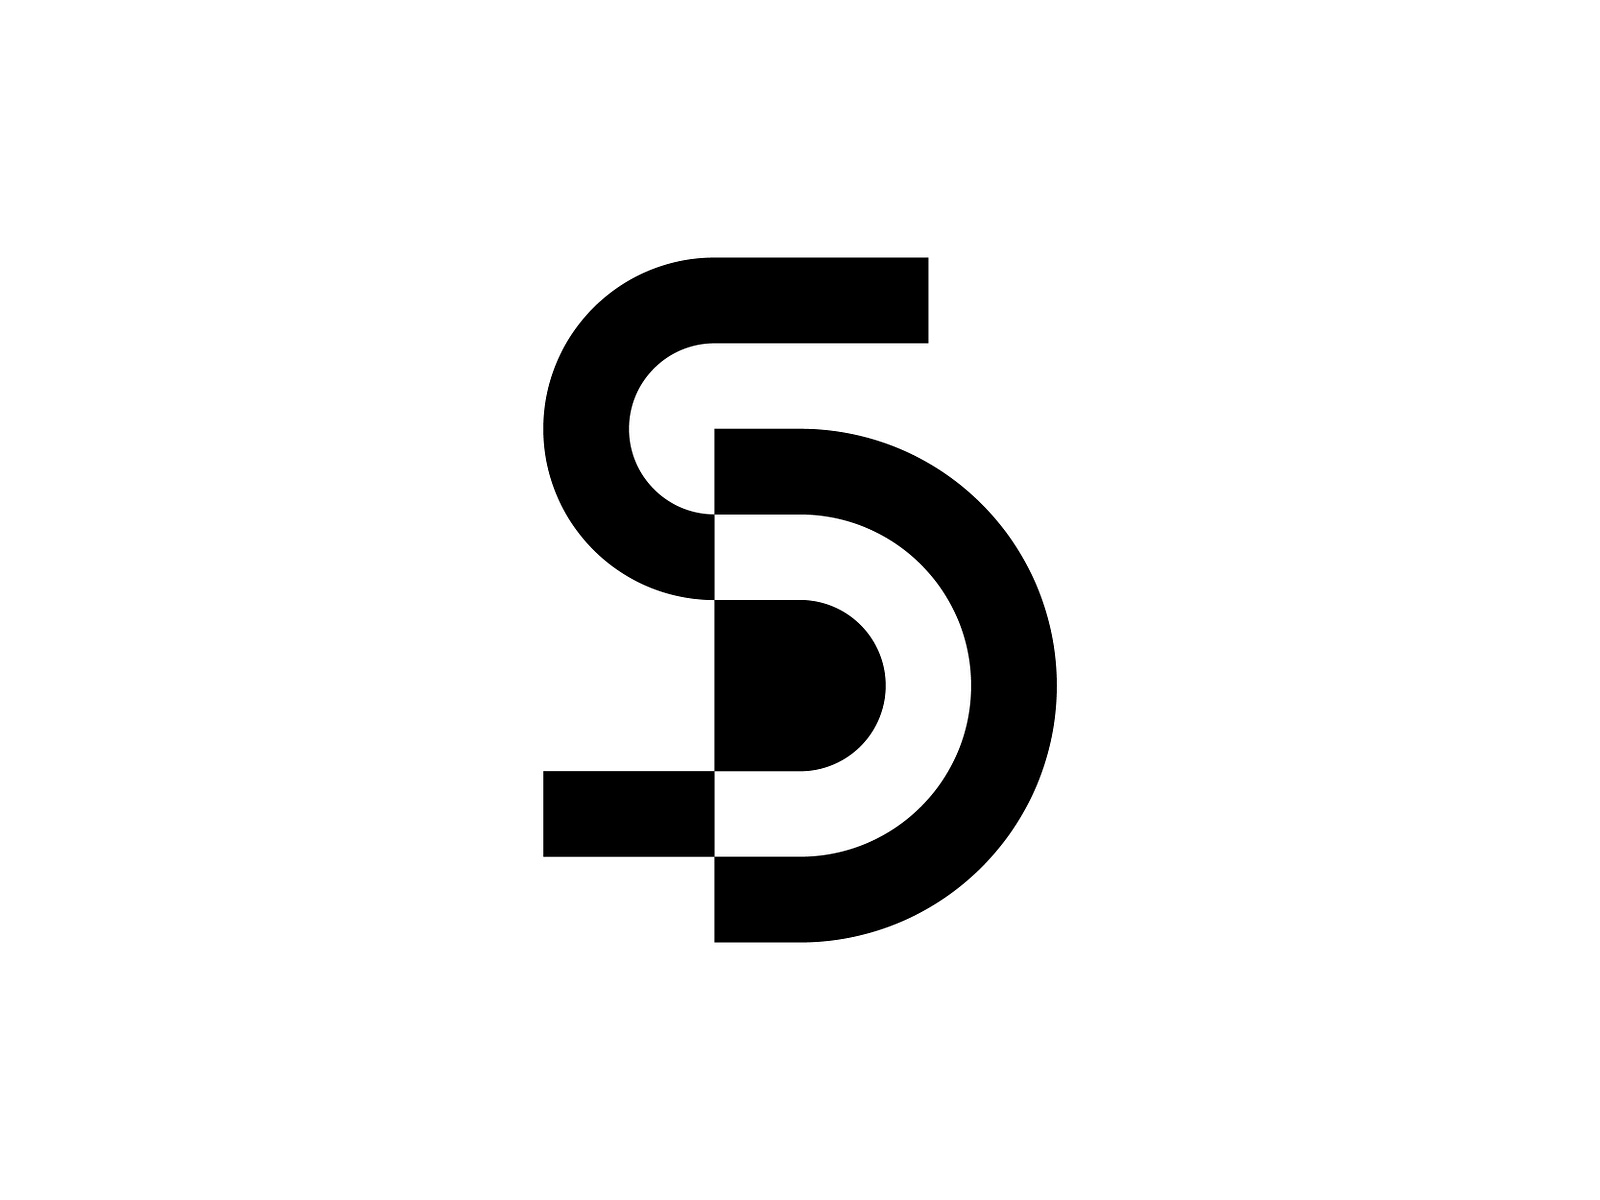 SD monogram by logojoss on Dribbble